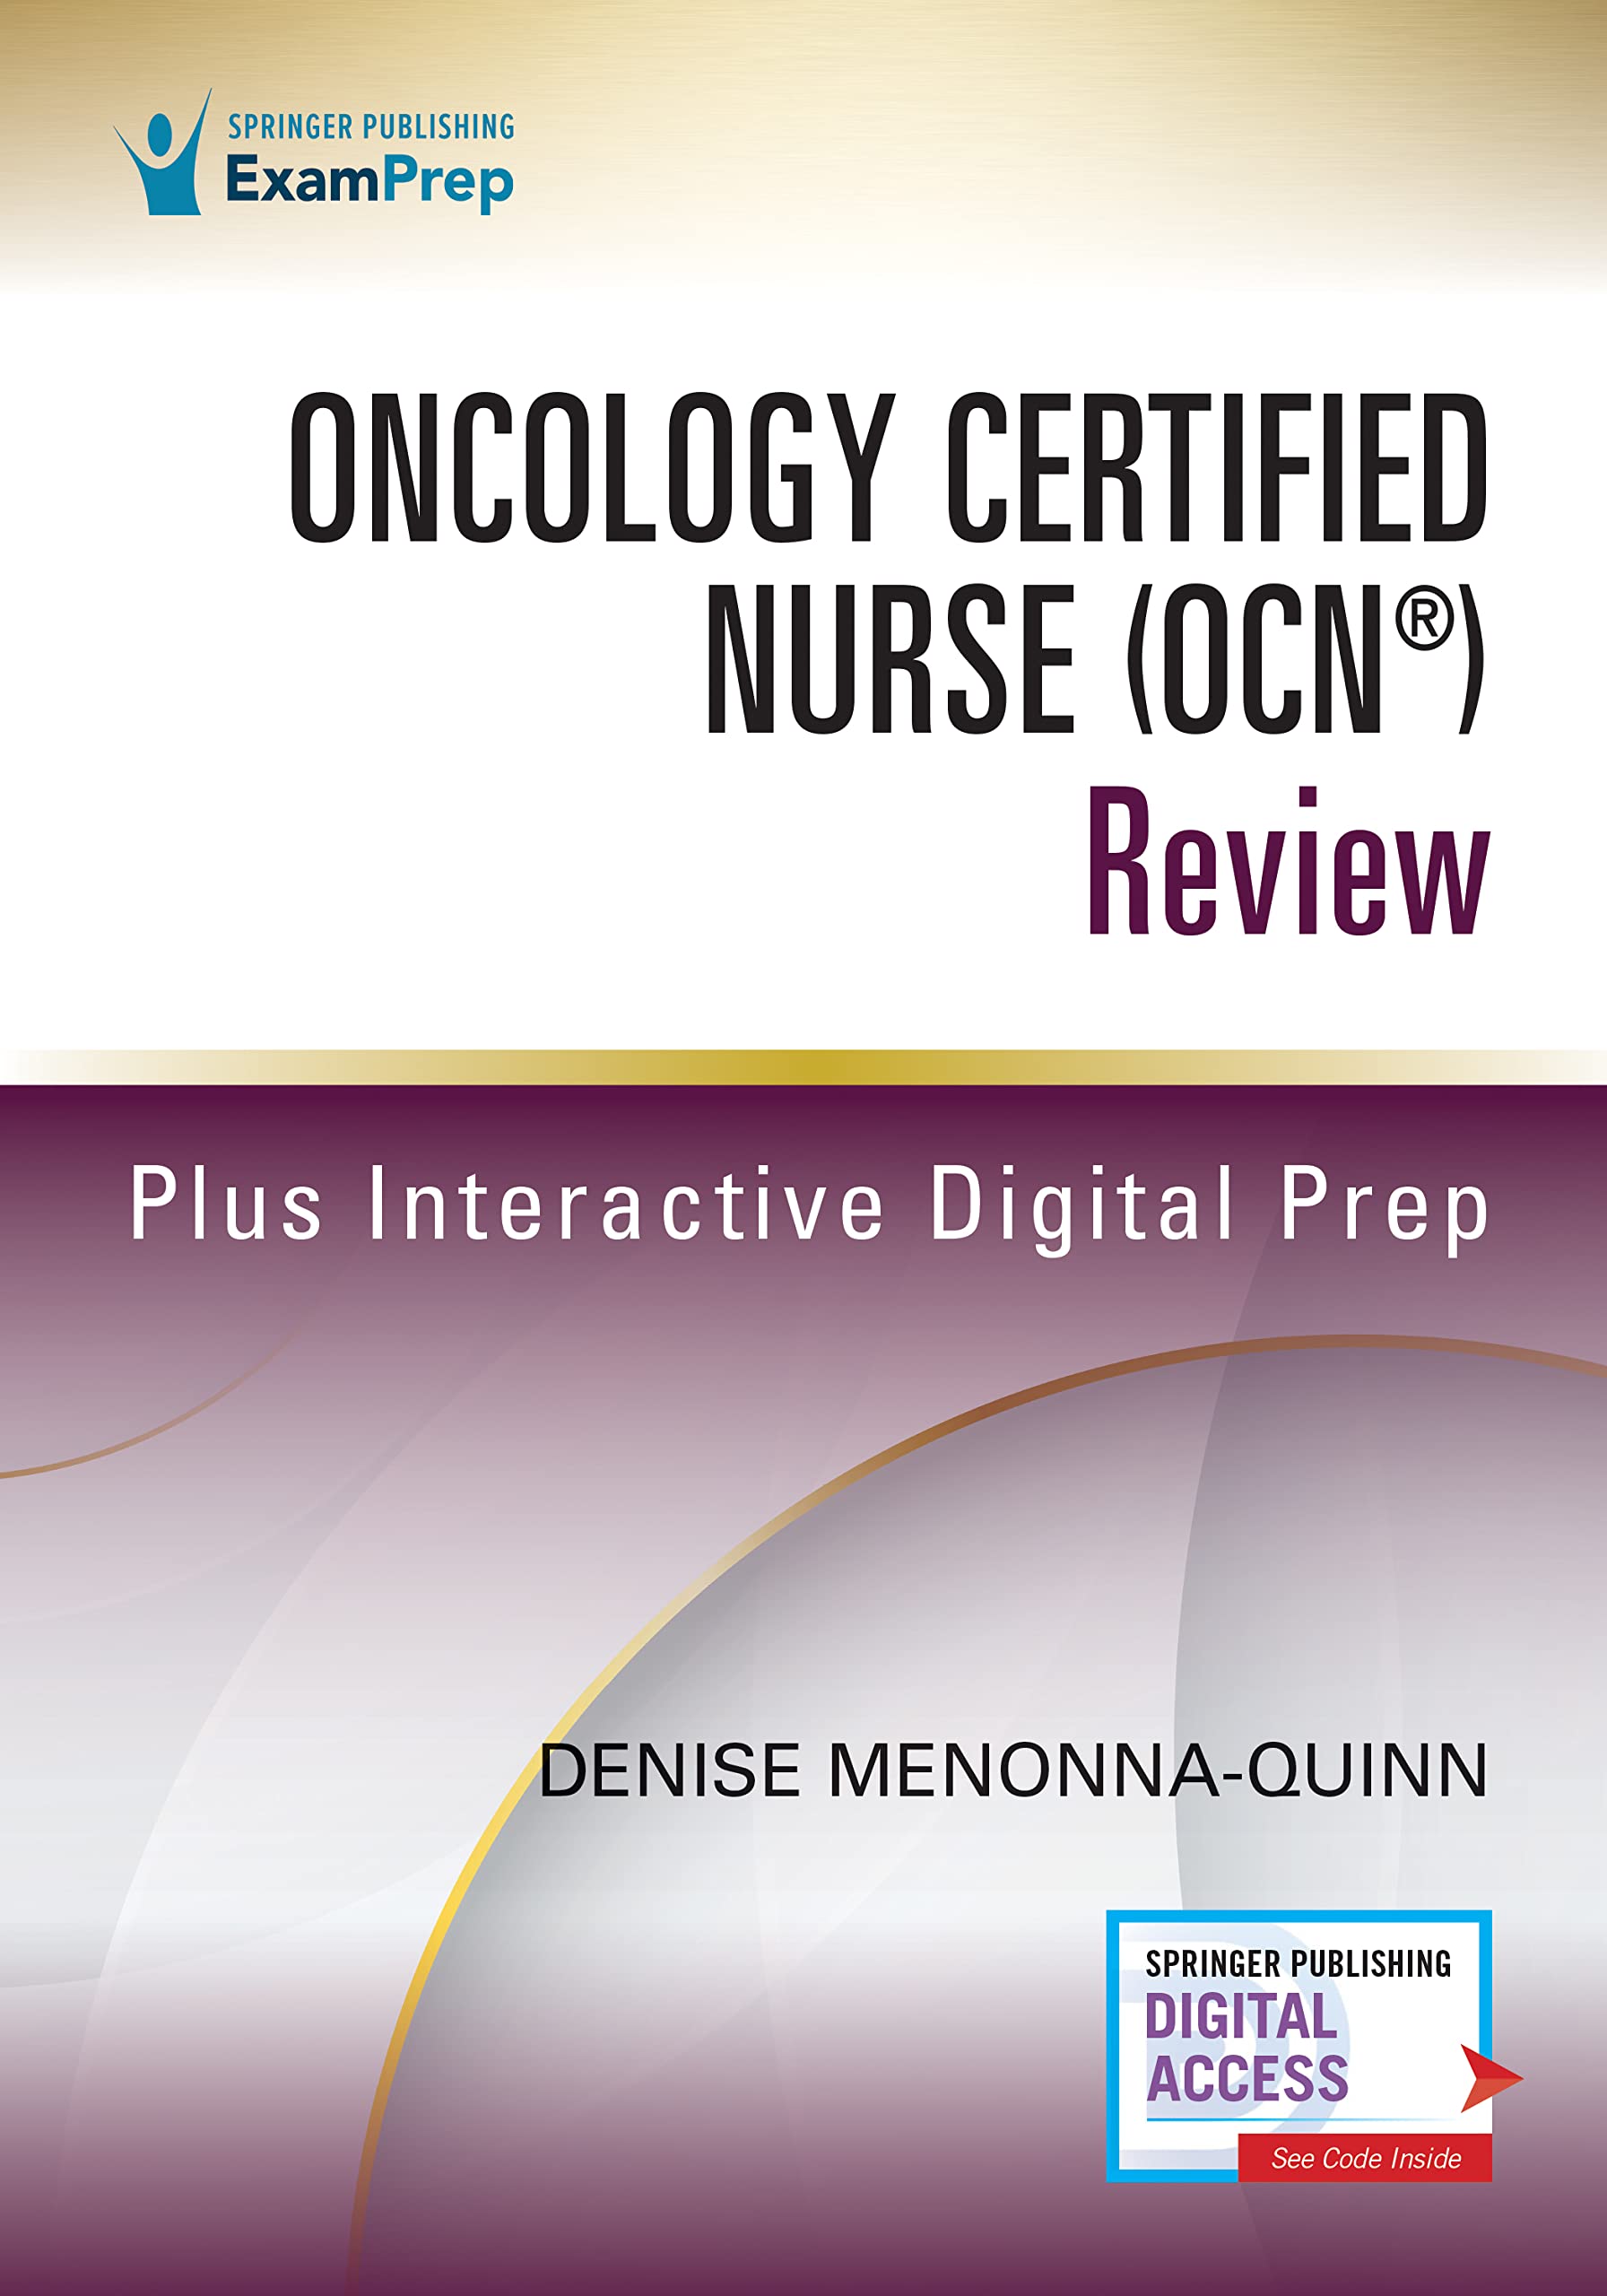 Oncology Certified Nurse (OCN®) Review 1st Edition – Comprehensive Oncology Nurse Print + Digital Resource, Includes Digital Content Via ExamPrepConnect